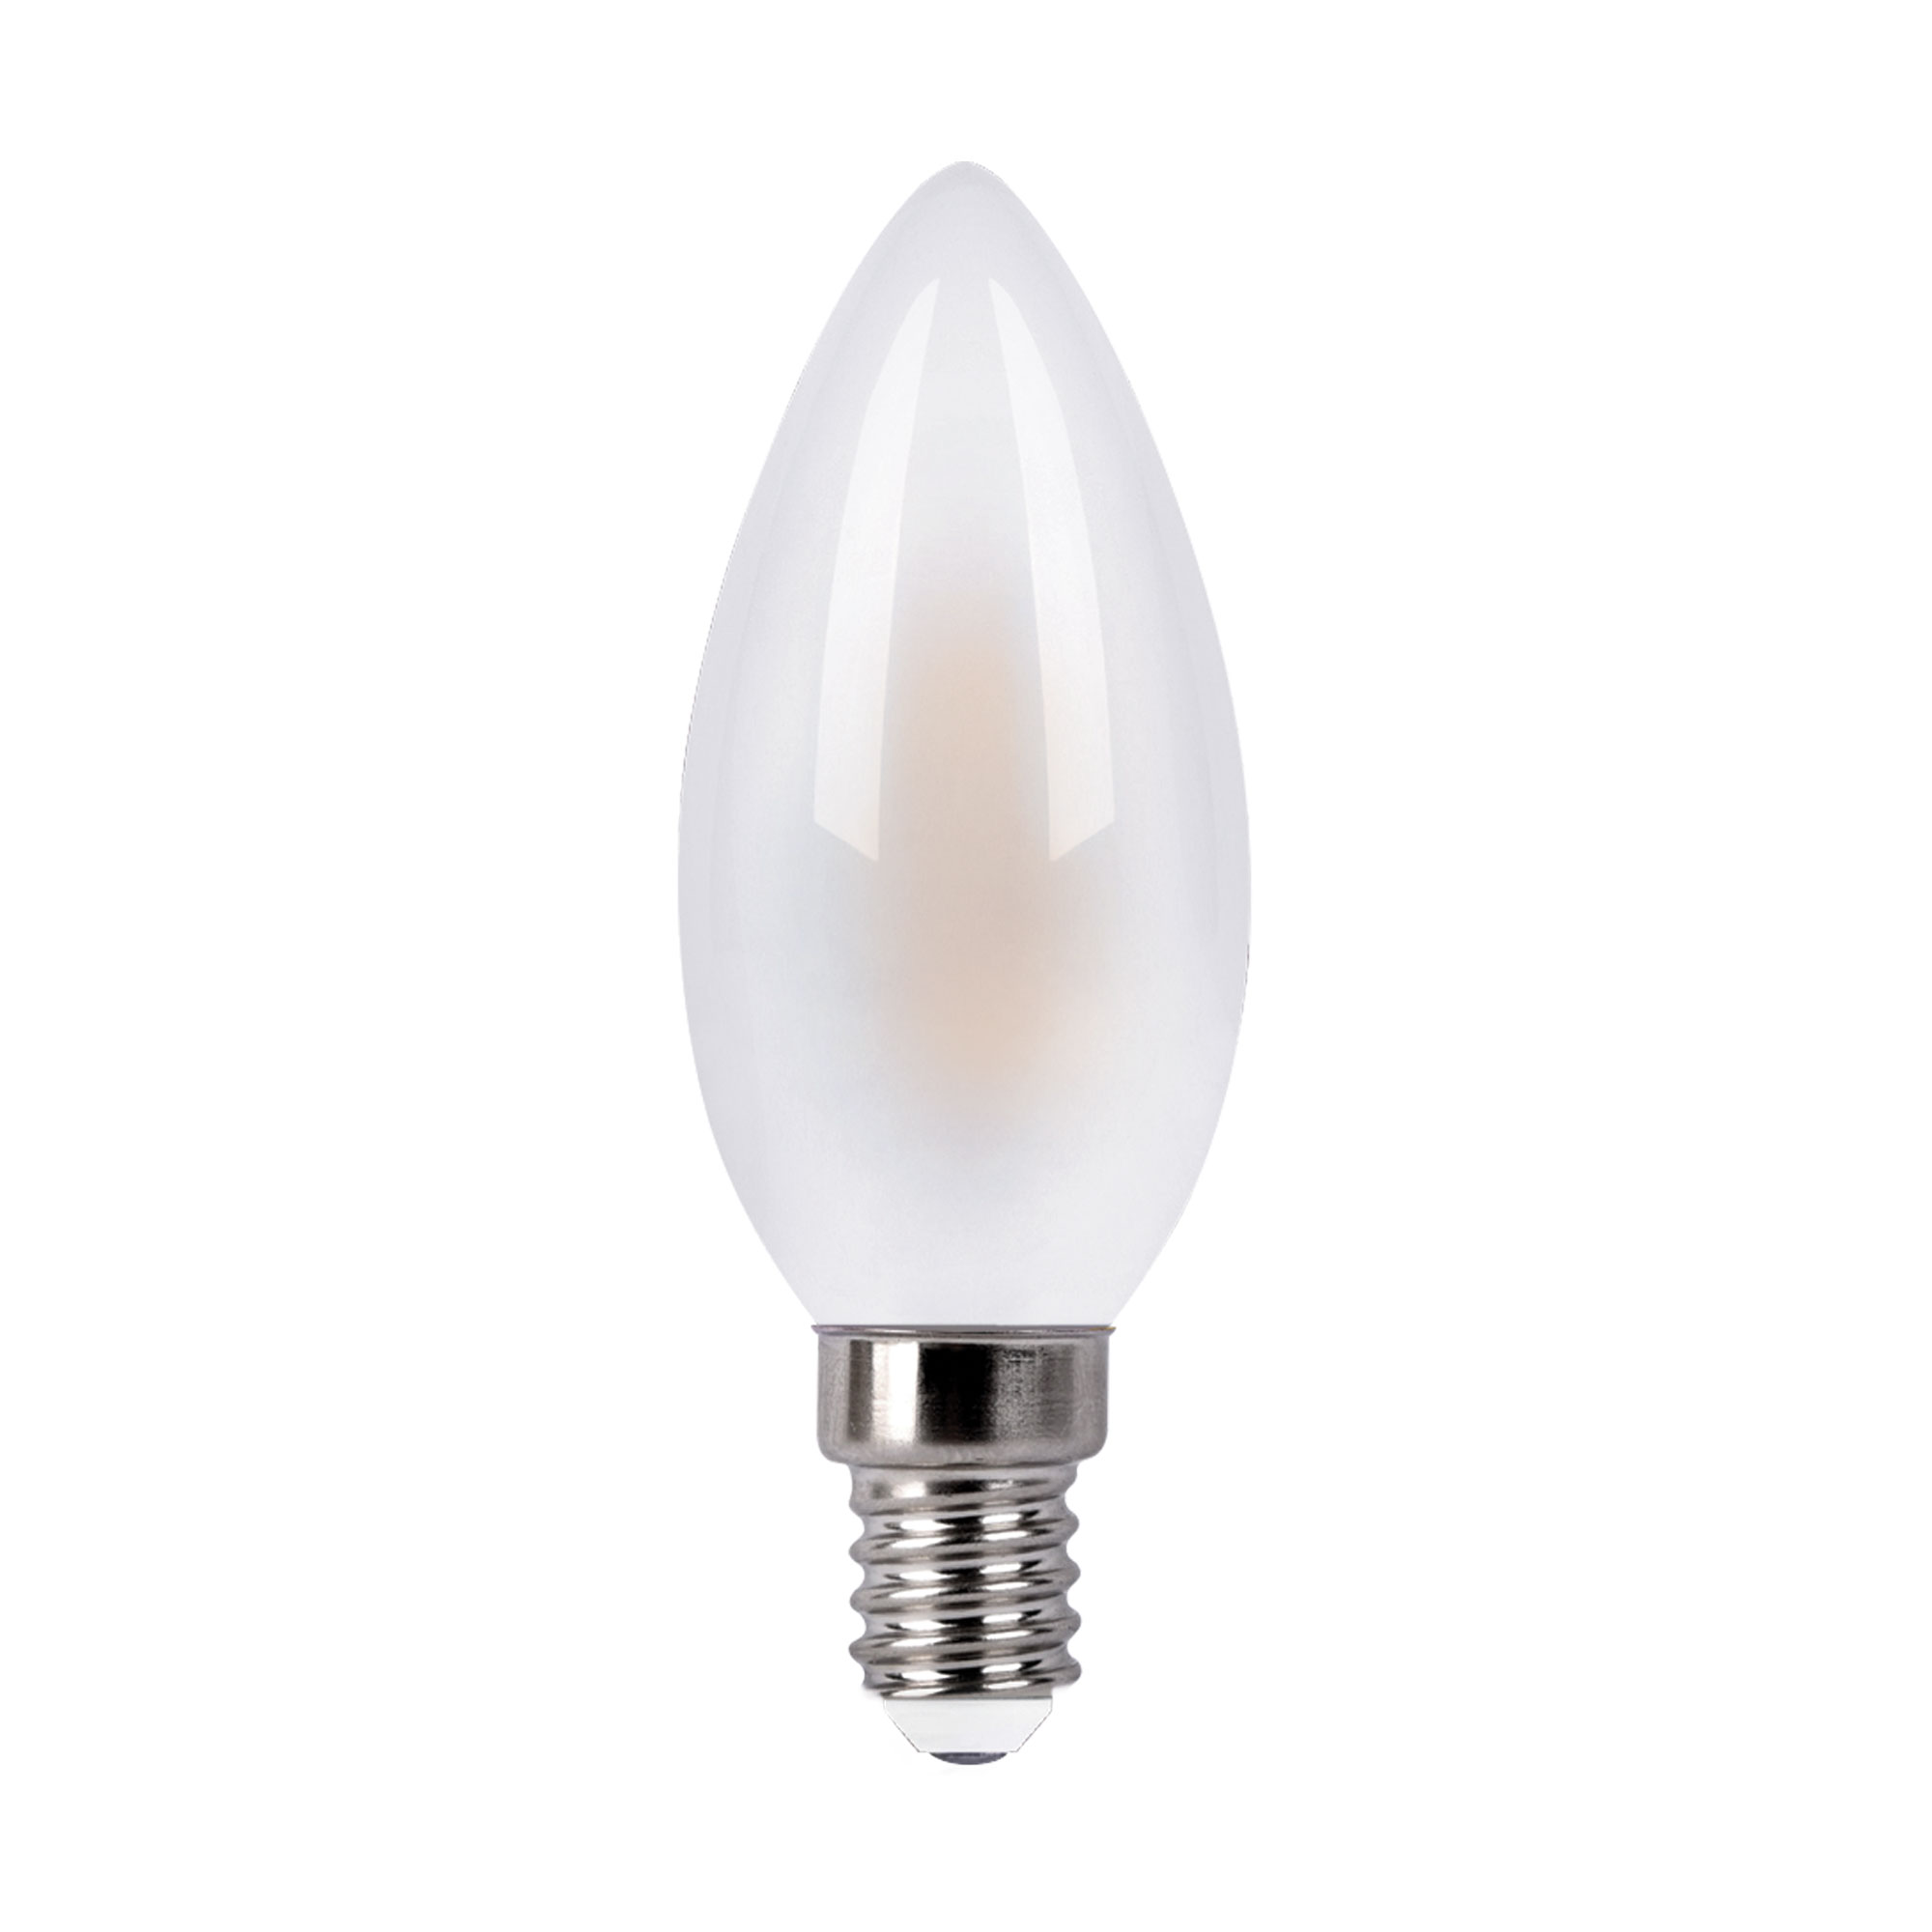 Филаментная светодиодная лампа "Свеча" С35 7W 4200K E14 Elektrostandard BLE1410 a049063